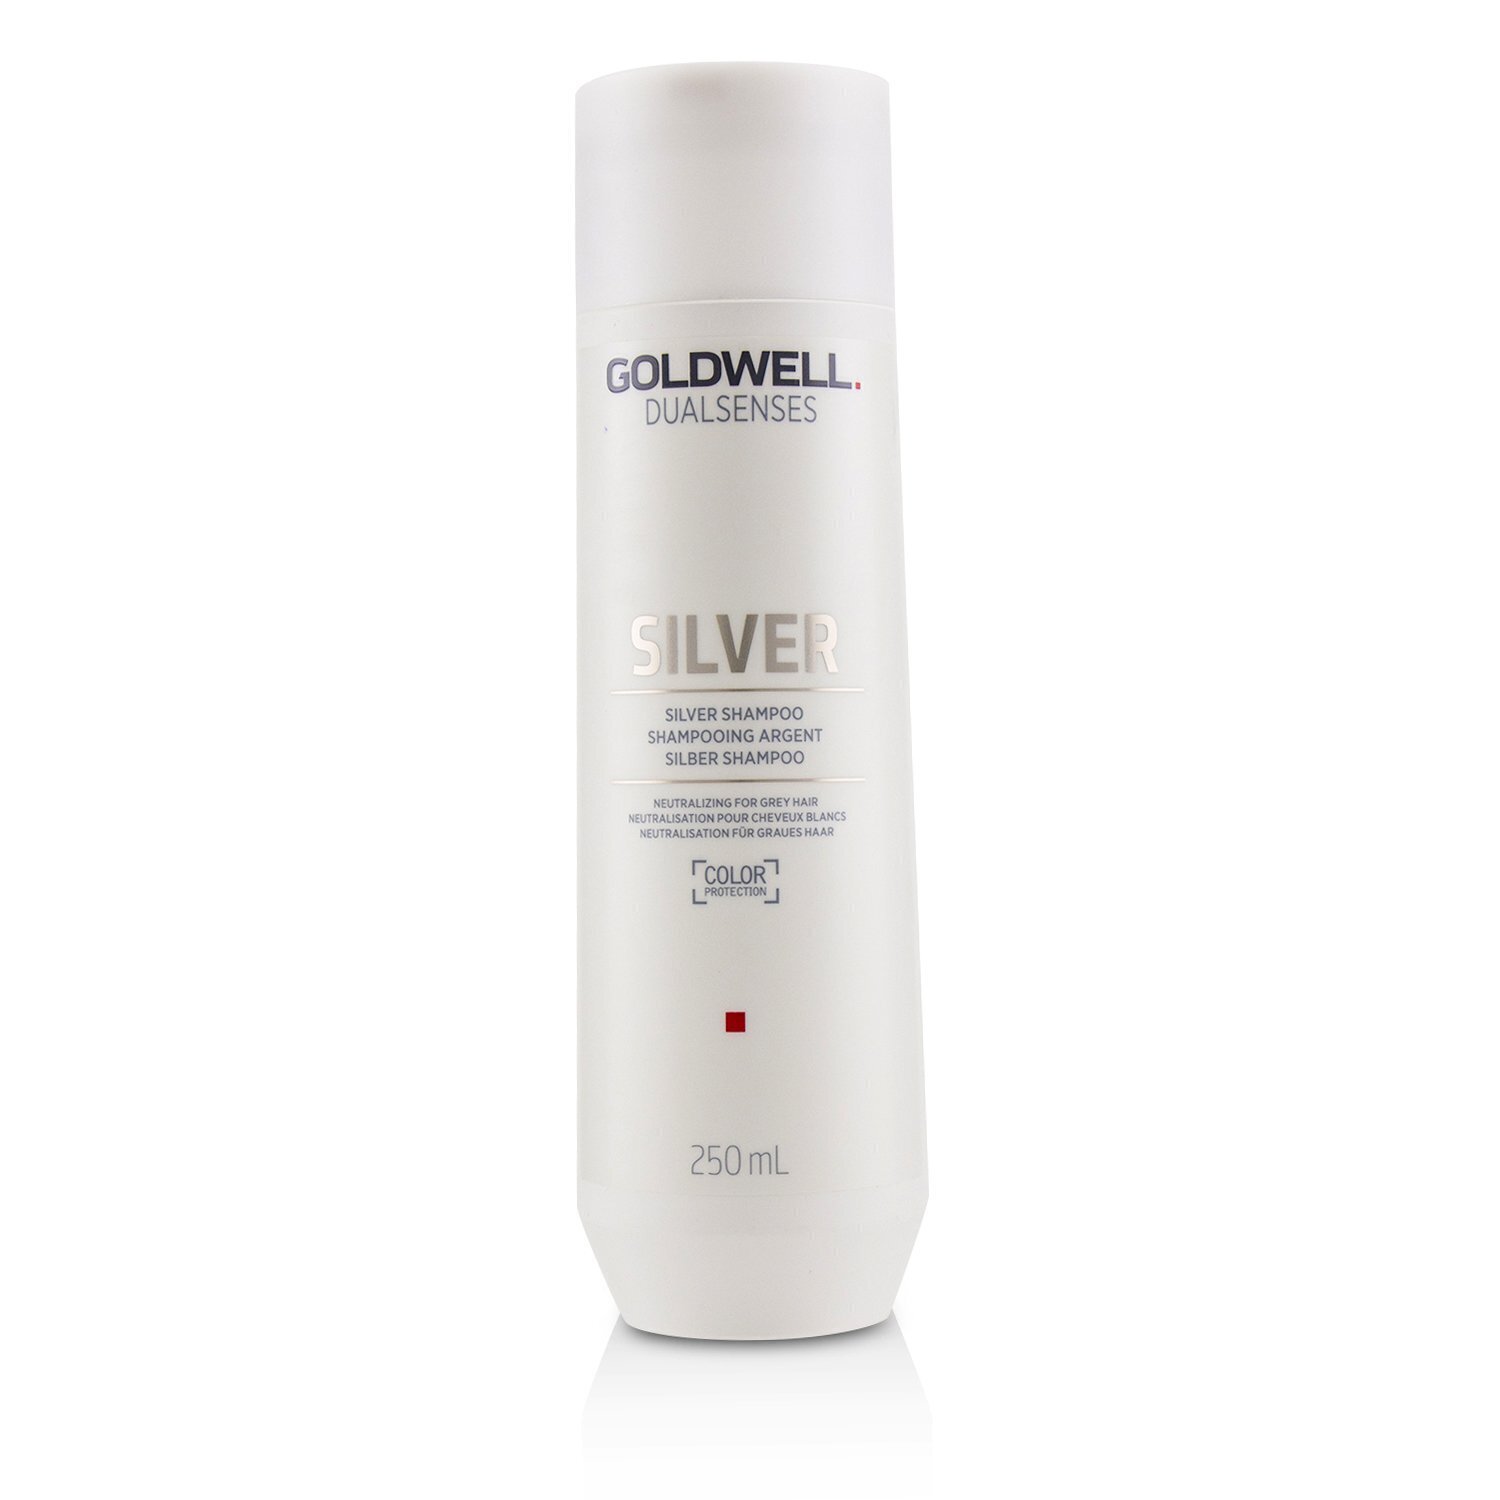 歌薇 Goldwell - 銀色洗髮露(灰色頭髮適用)Dual Senses Silver Shampoo